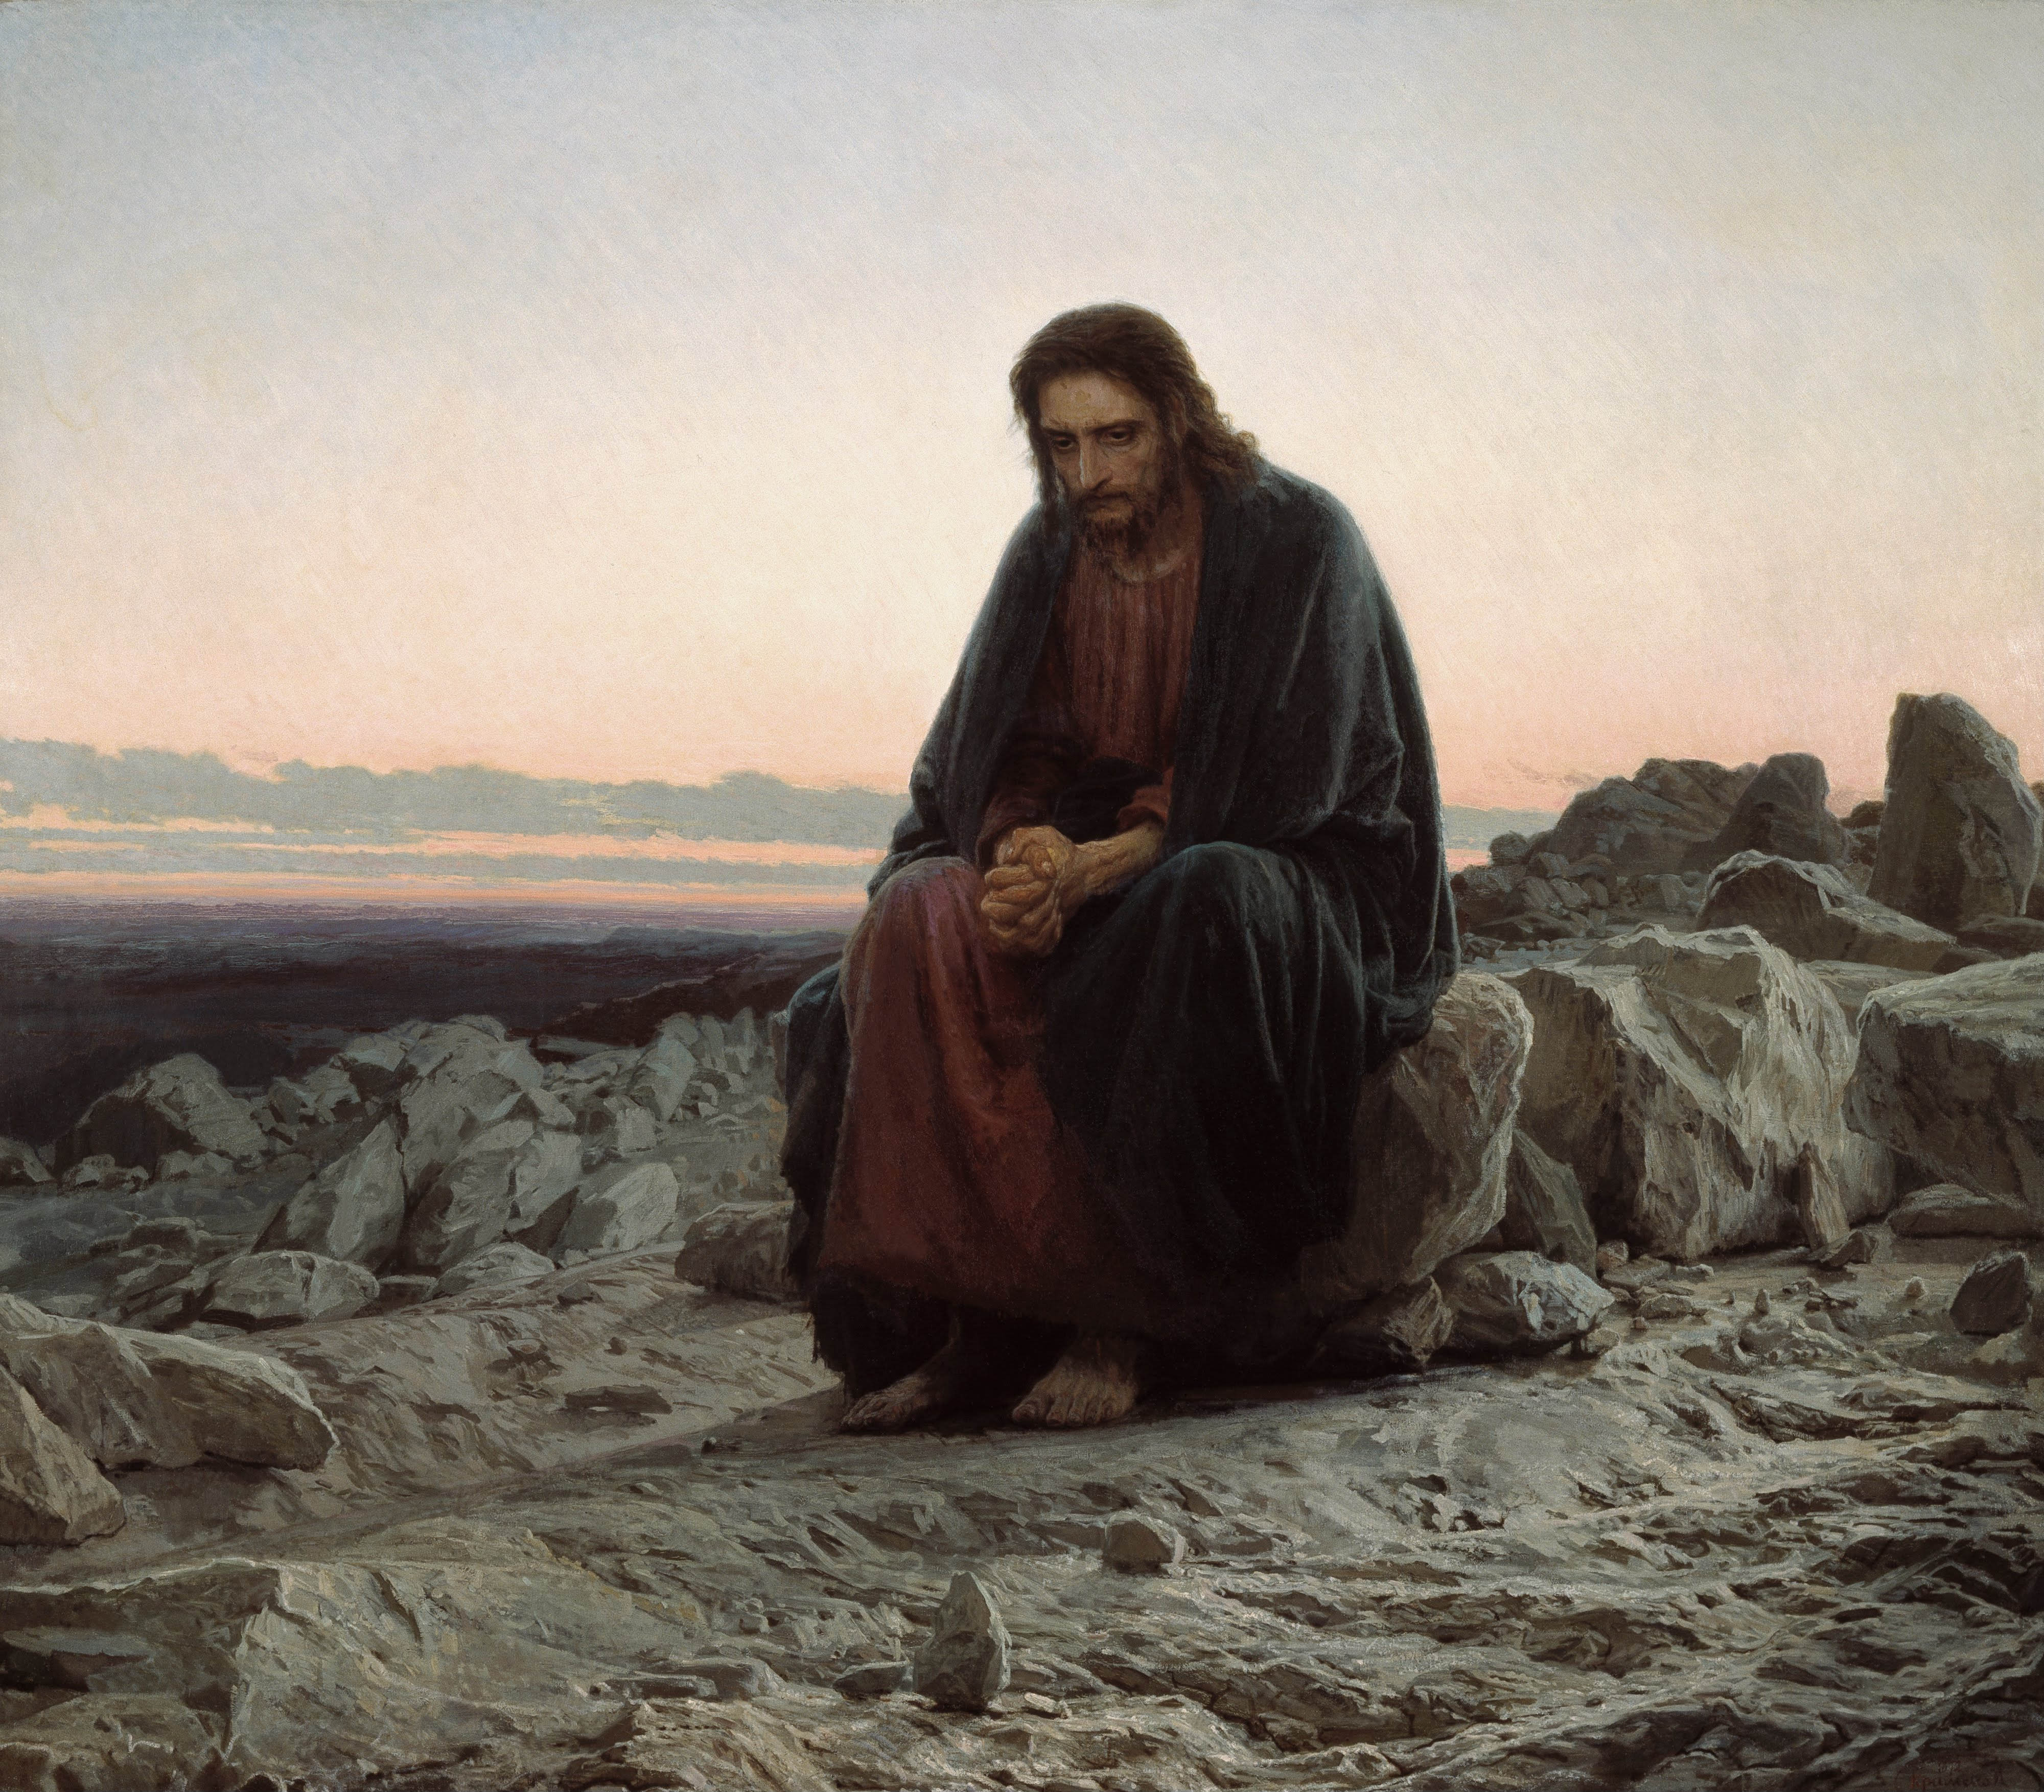 Hristos în Pustietate by Ivan Kramskoi - 1872 - 180 cm x 210 cm 